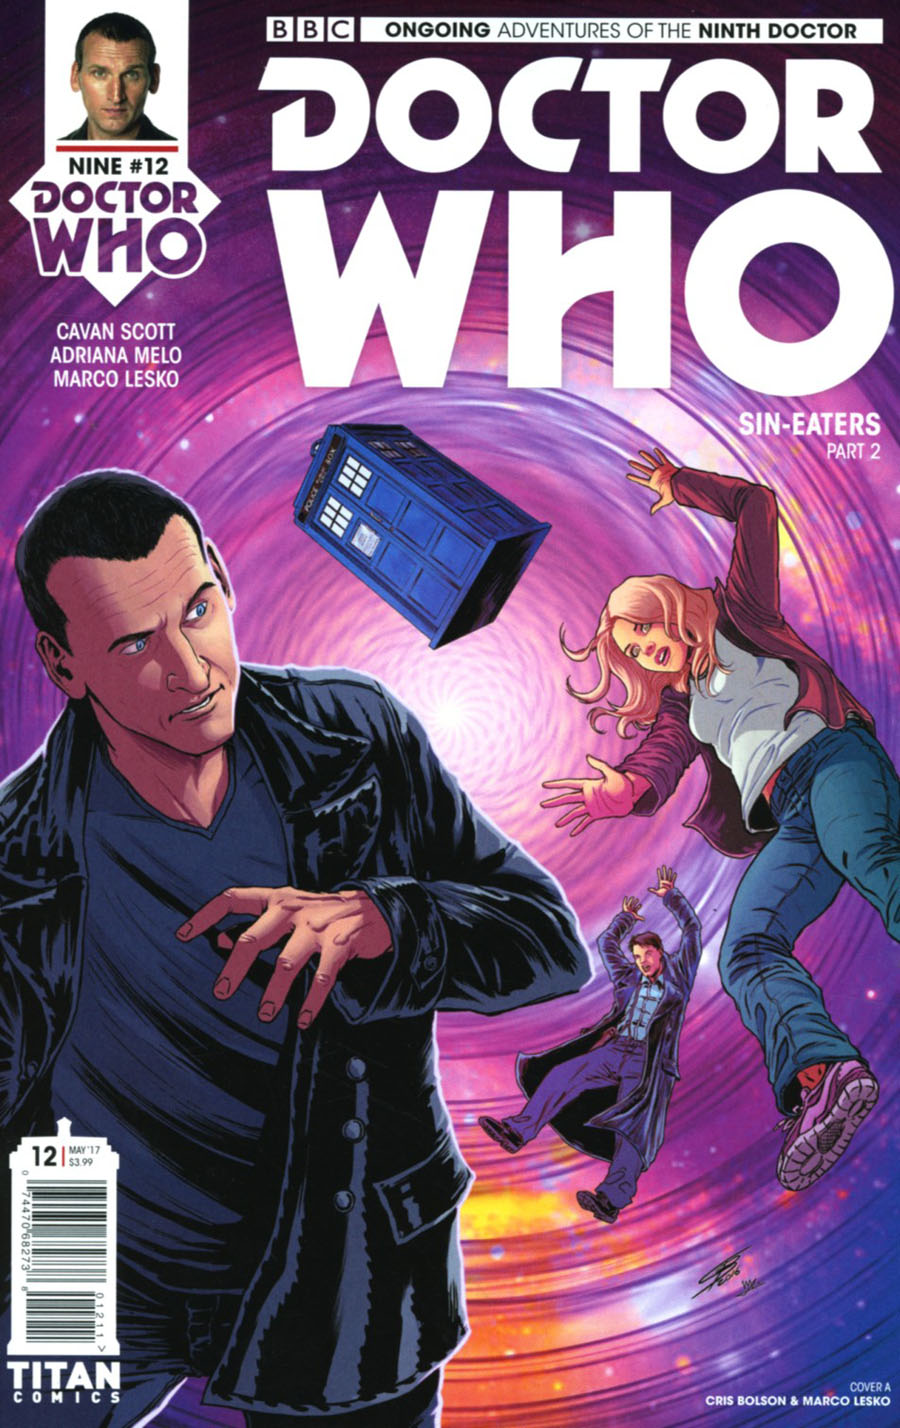 Doctor Who 9th Doctor Vol 2 #12 Cover A Regular Cris Bolson Cover